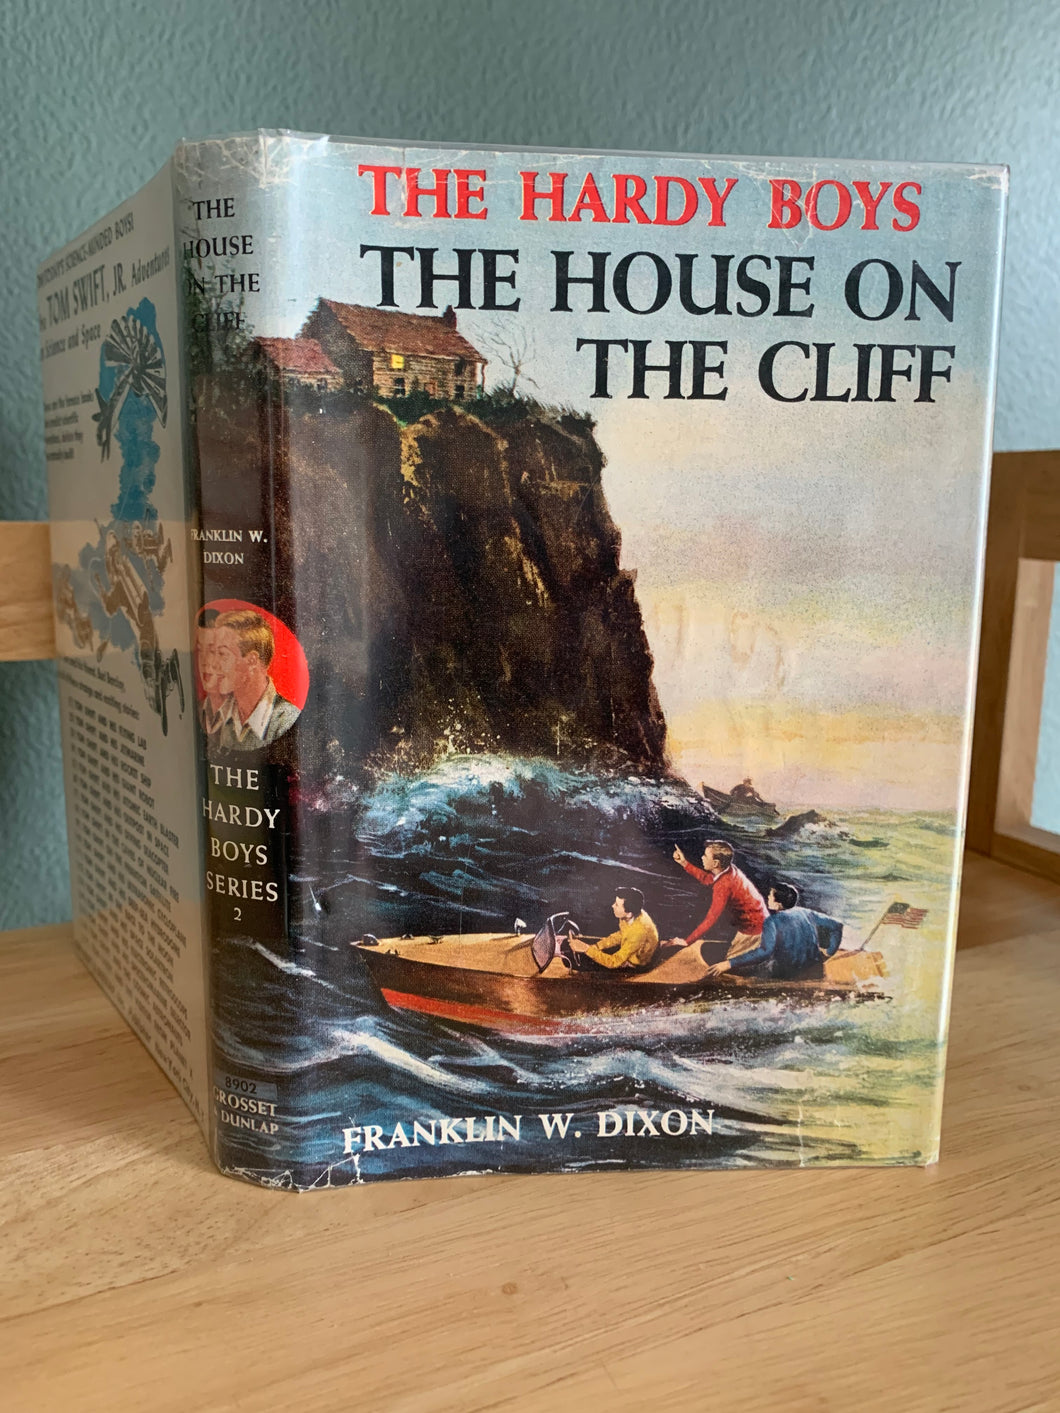 The Hardy Boys - The House on the Cliff